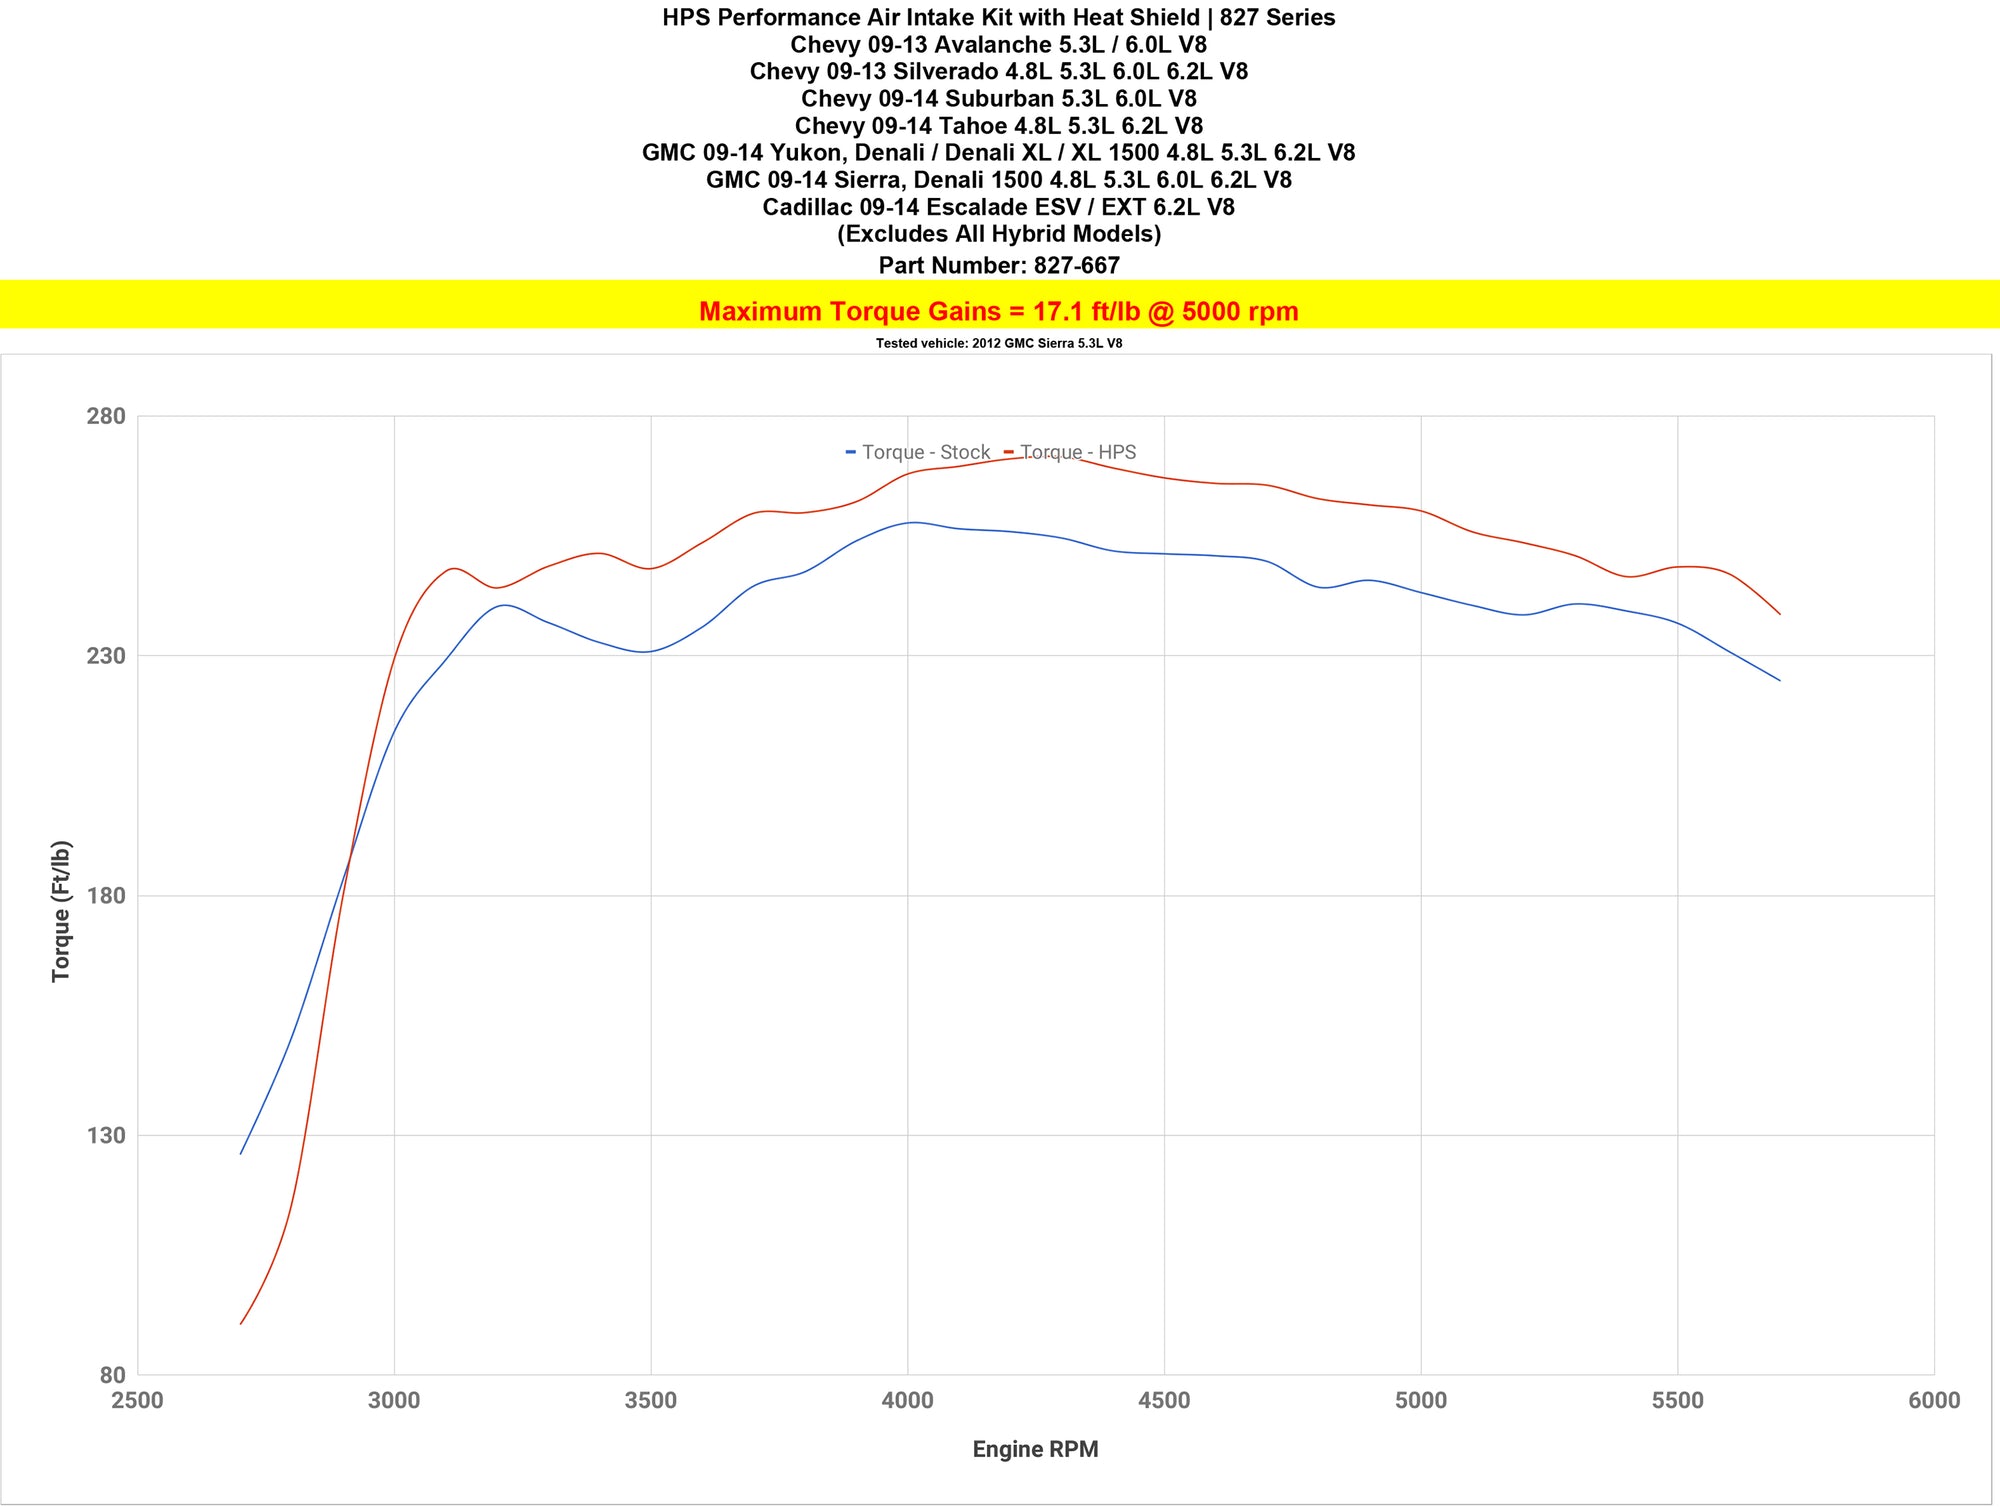 Dyno proven gains 17.1 ft/lb HPS Performance Shortram Air Intake Kit 2009-2014 GMC Sierra 1500 4.8L 5.3L 6.0L 6.2L V8 (Excludes Hybrid) 827-667WB